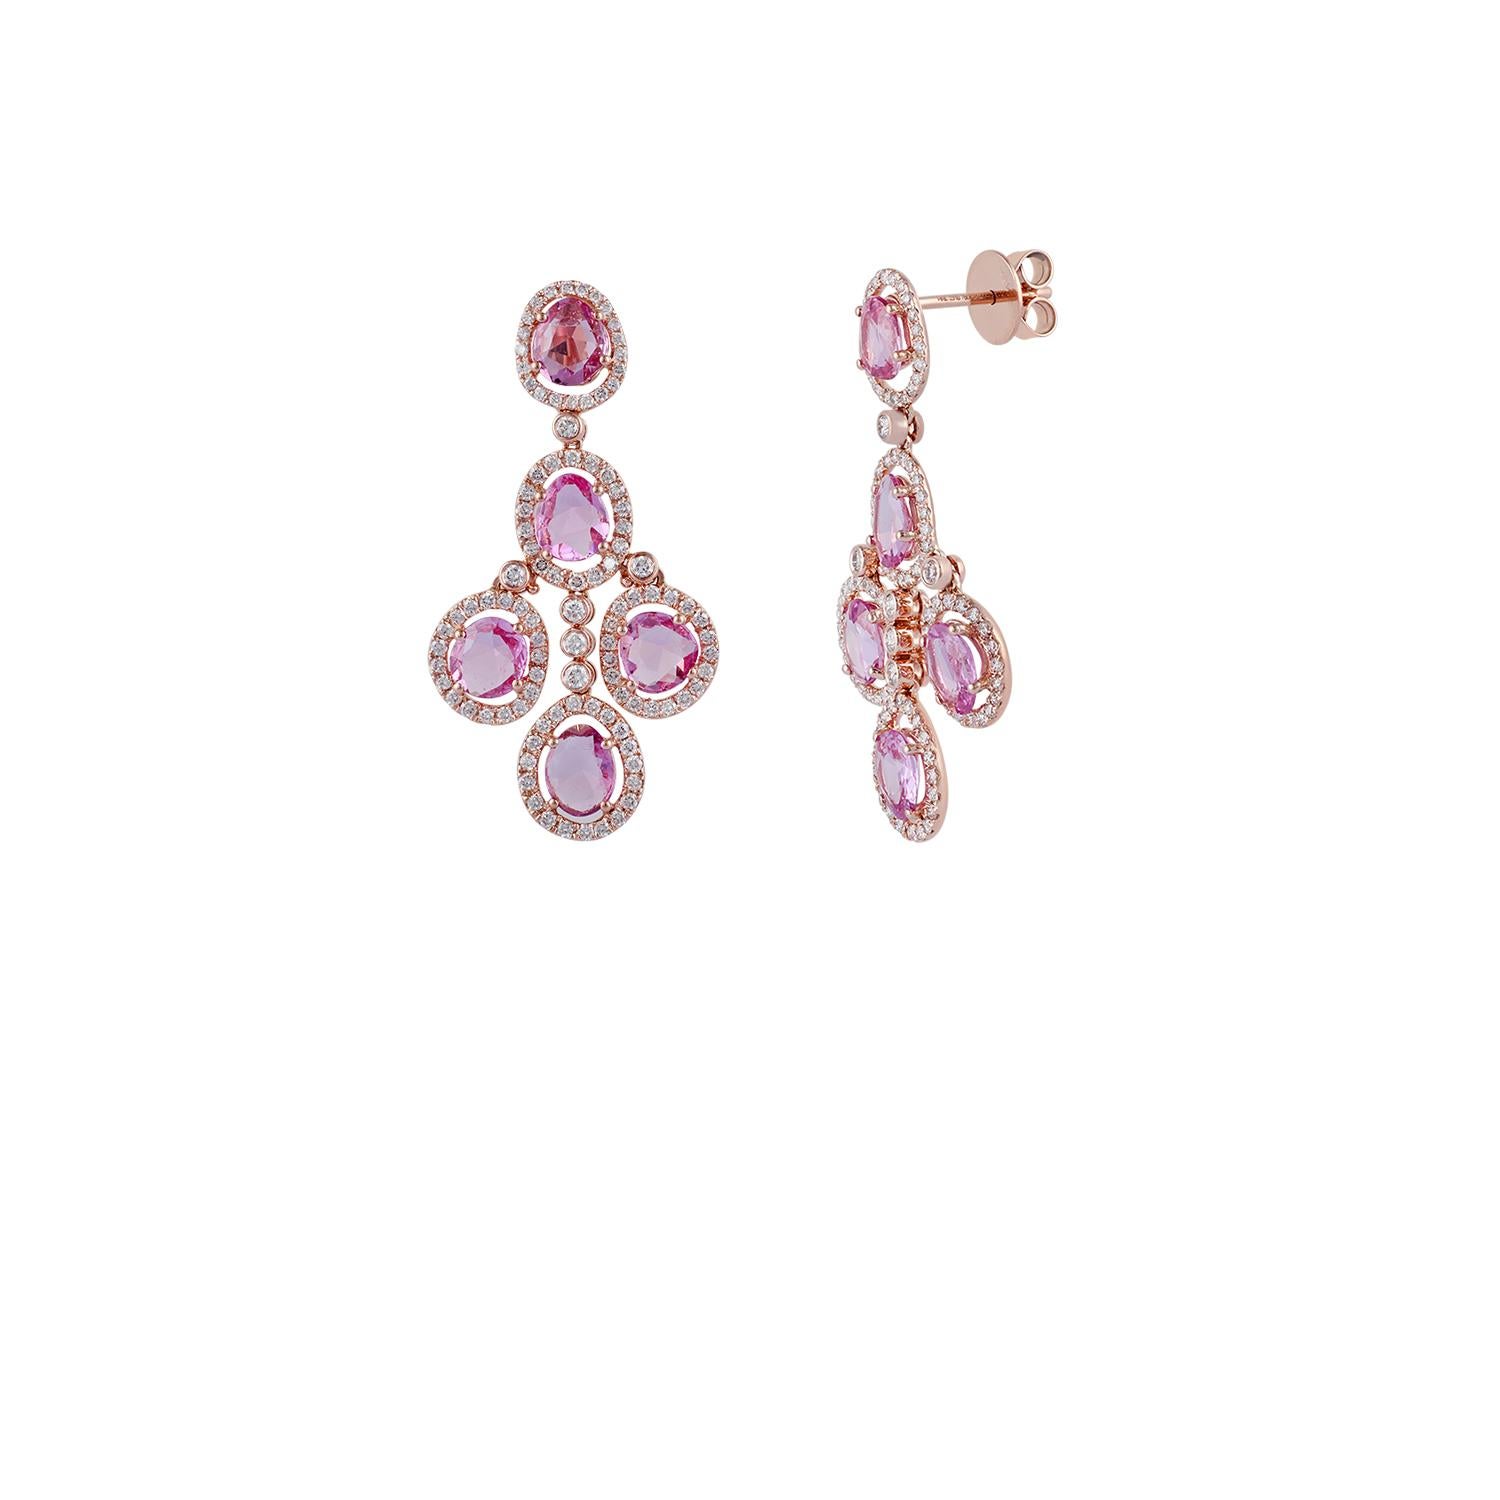 Pink Sapphire 6.57 Carat
Diamond 1.60 Carat
Rose Gold 18K 7.45 Grams